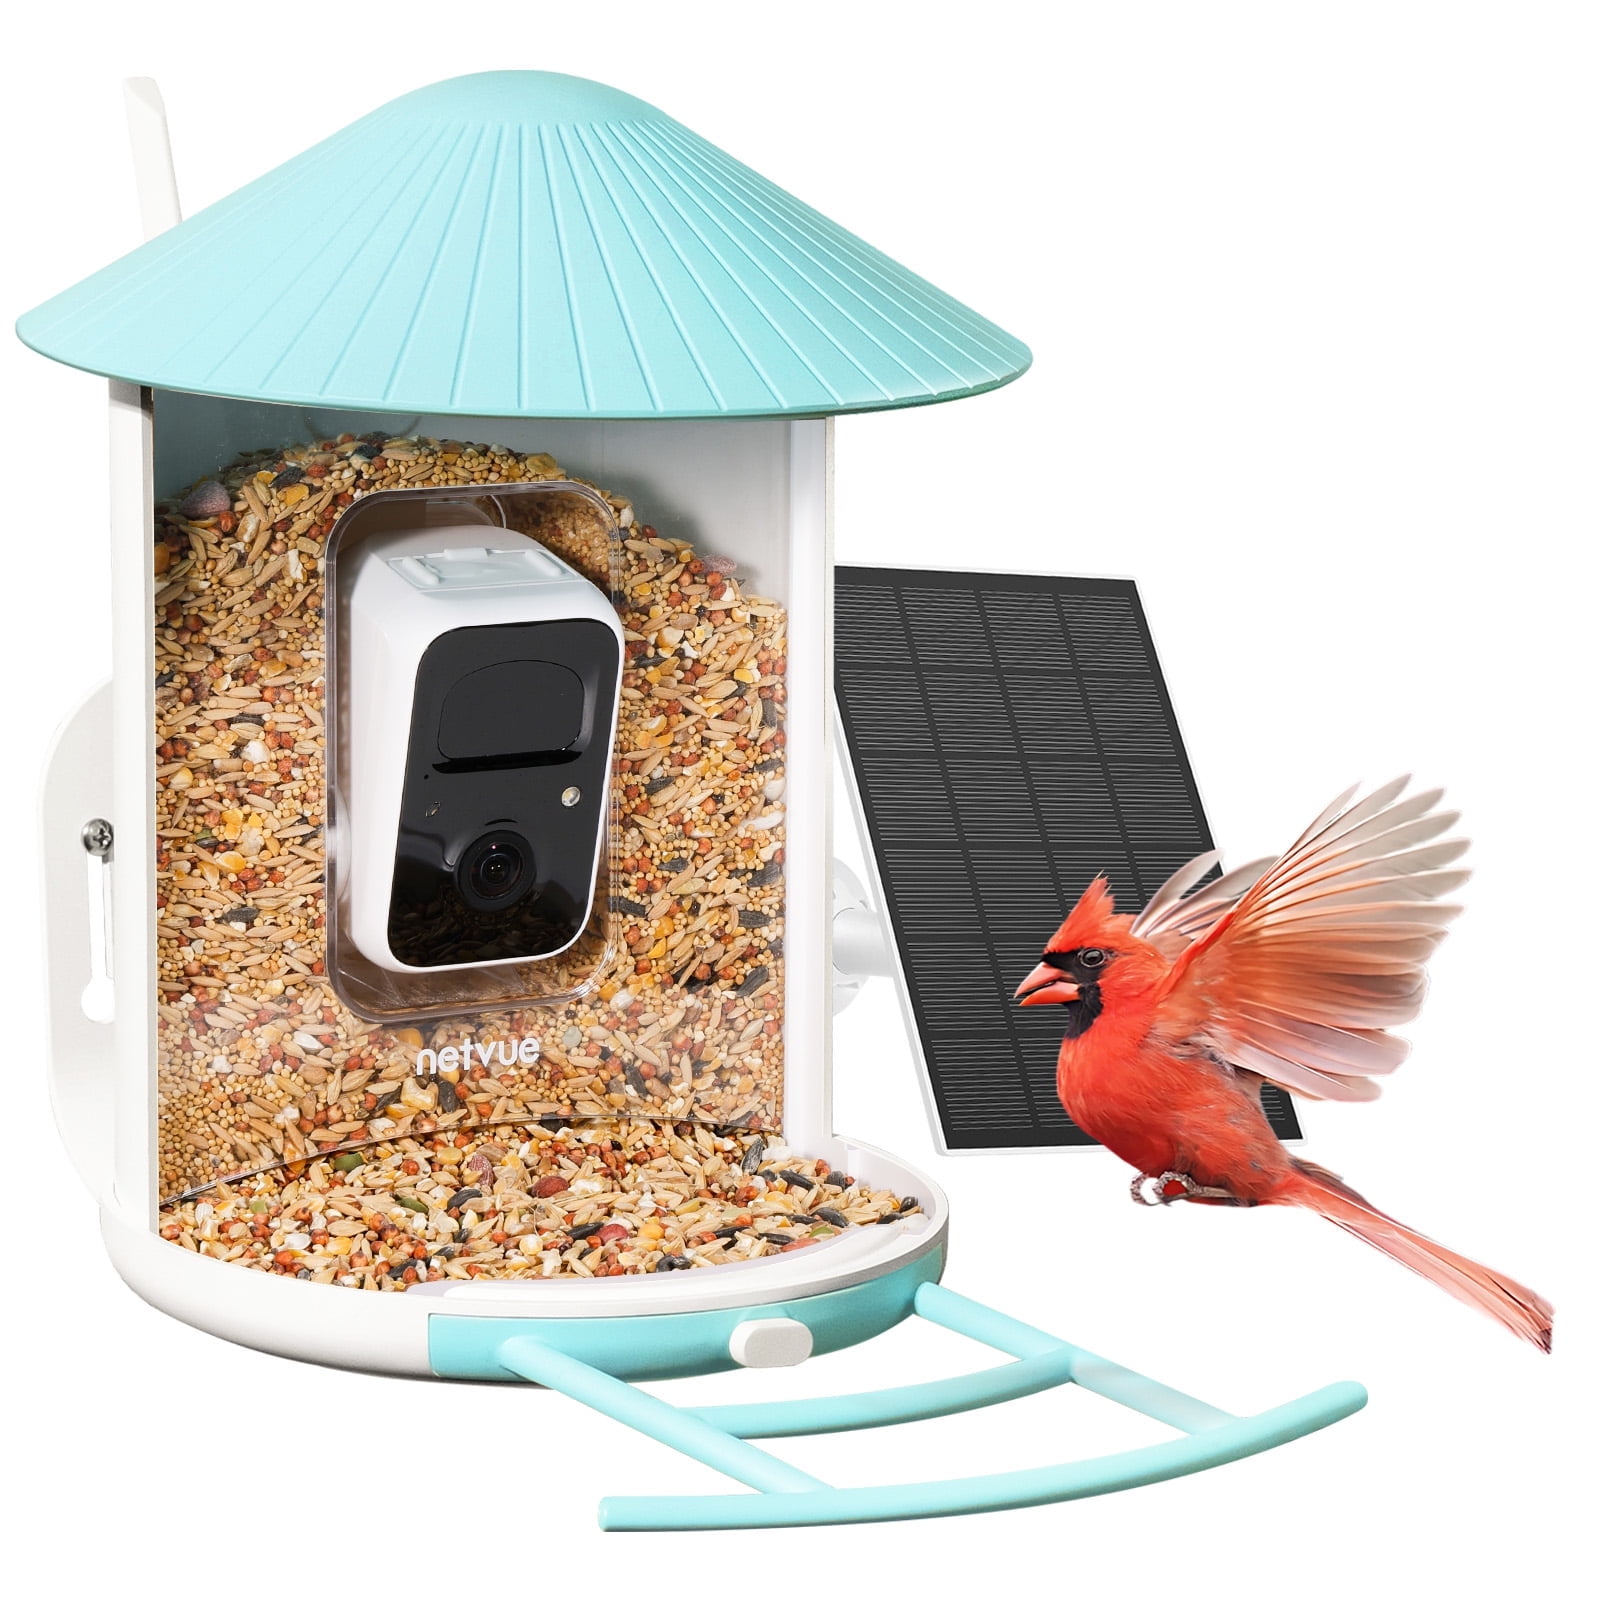 Netvue Birdfy Hummee extension - BirdGuides